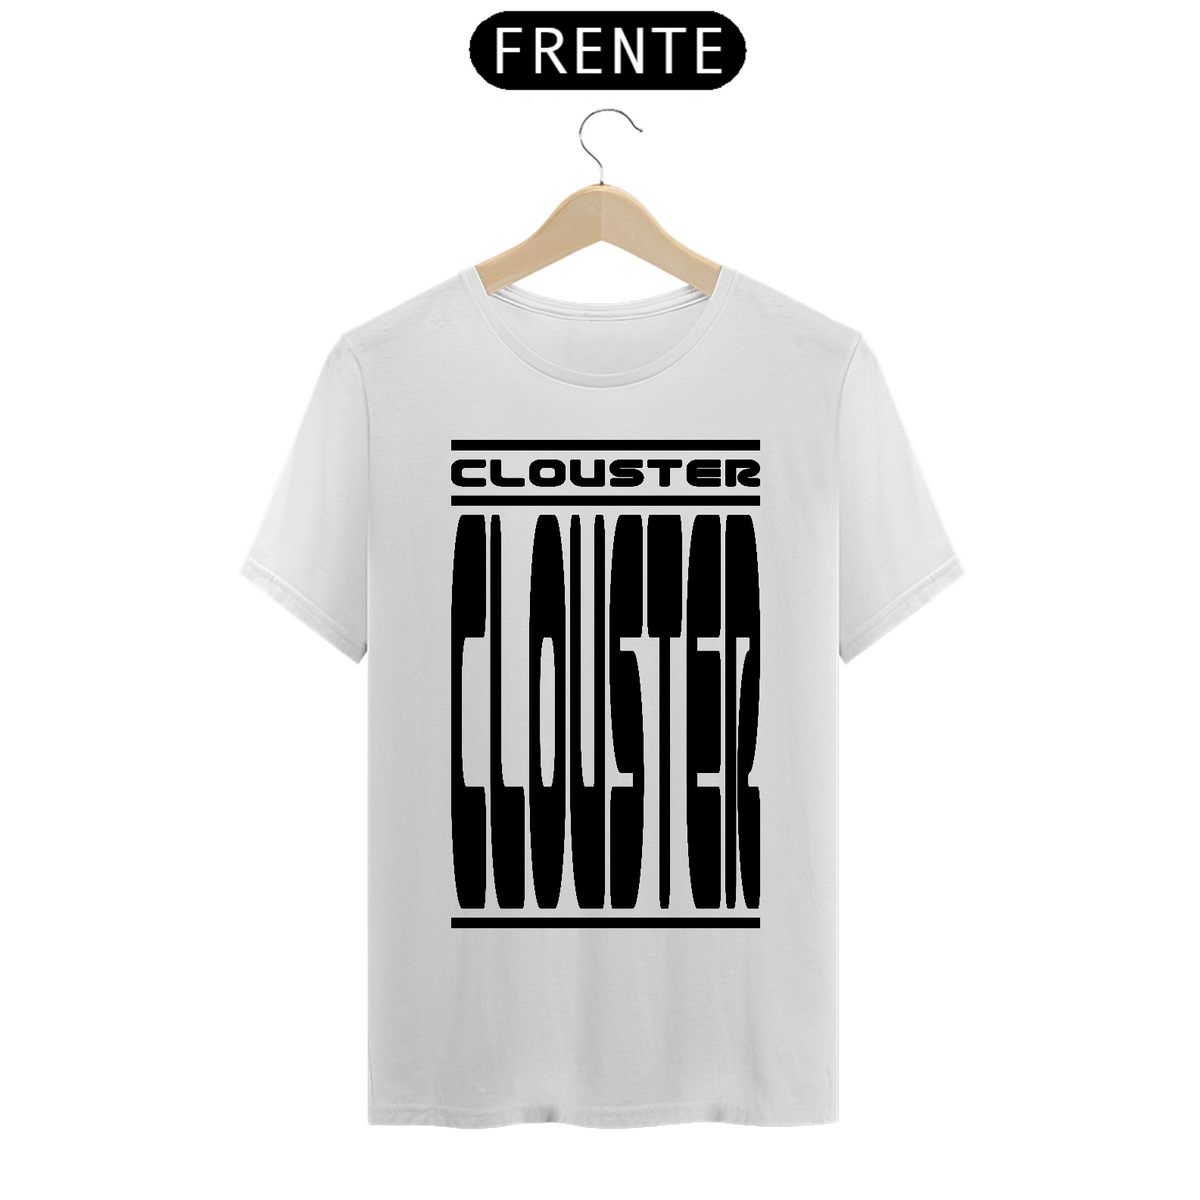 Nome do produto: Camiseta CLOUSTER Bloco 01 masculino